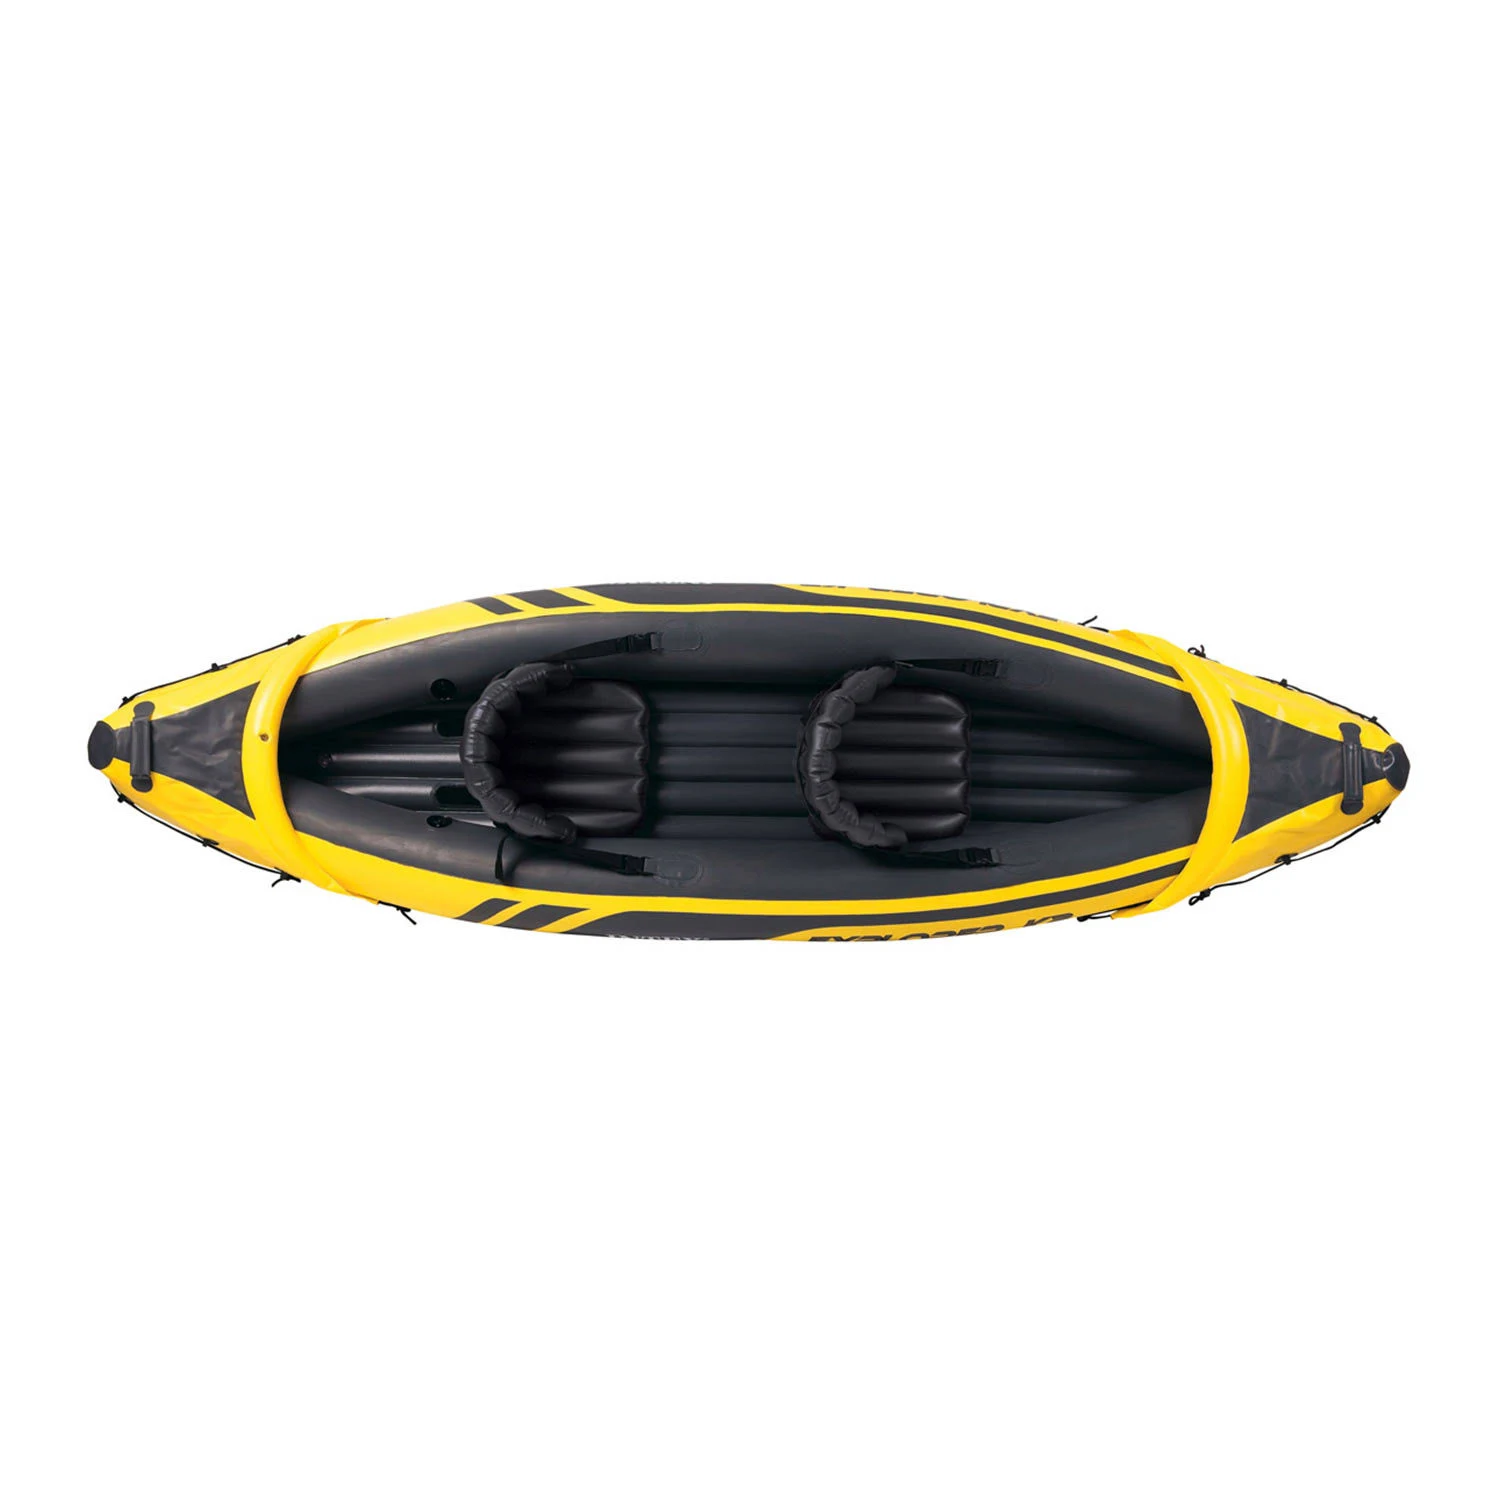 Intex Explorer K2 2-Person Inflatable Kayak Set, Yellow/Black